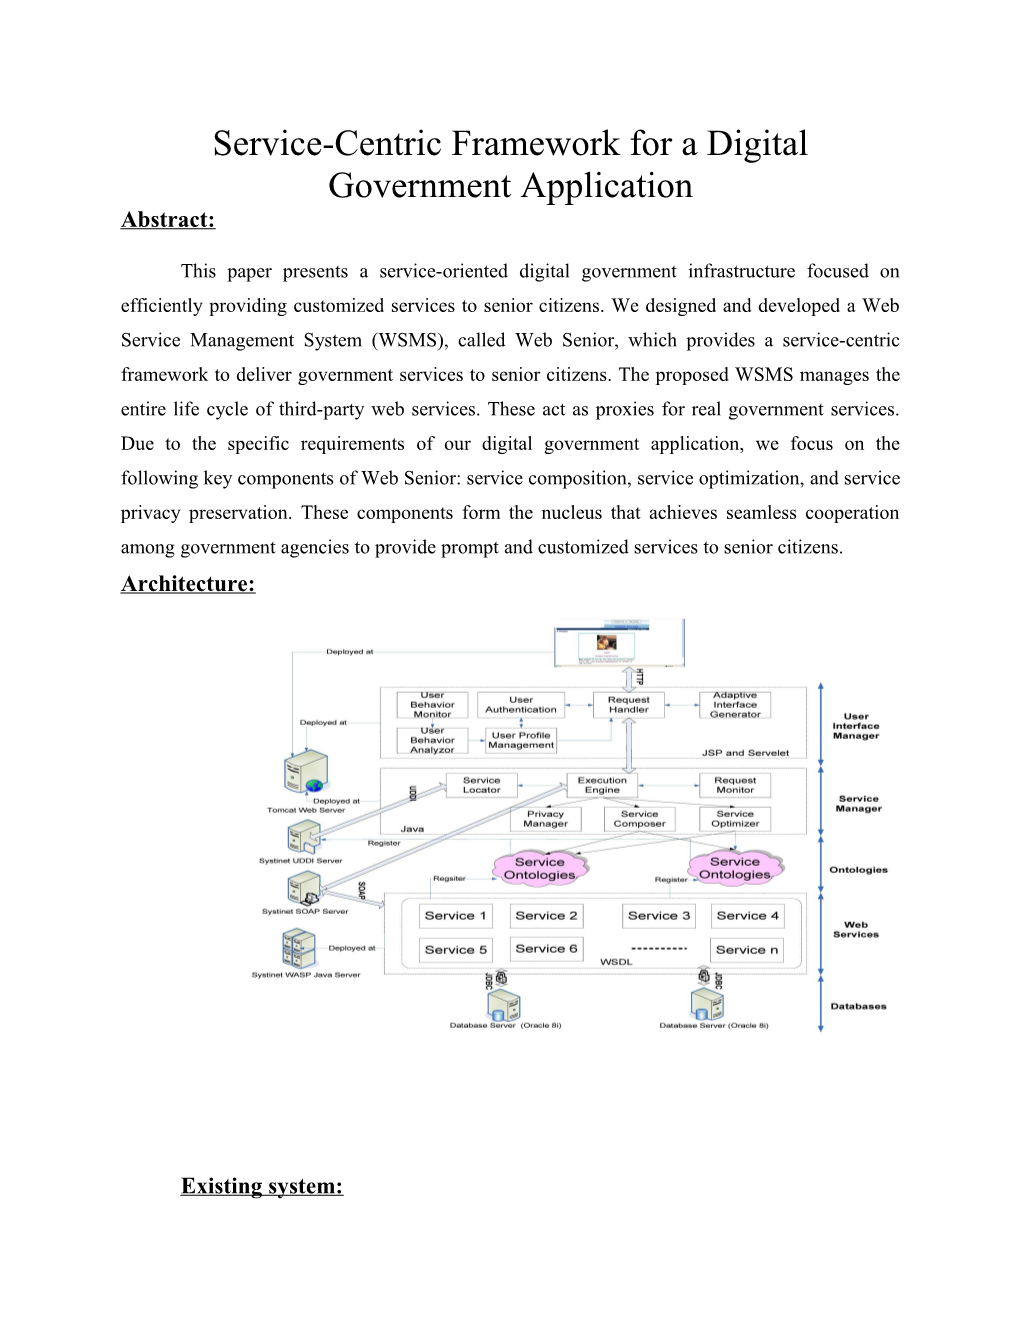 Service-Centric Framework for a Digital Government Application